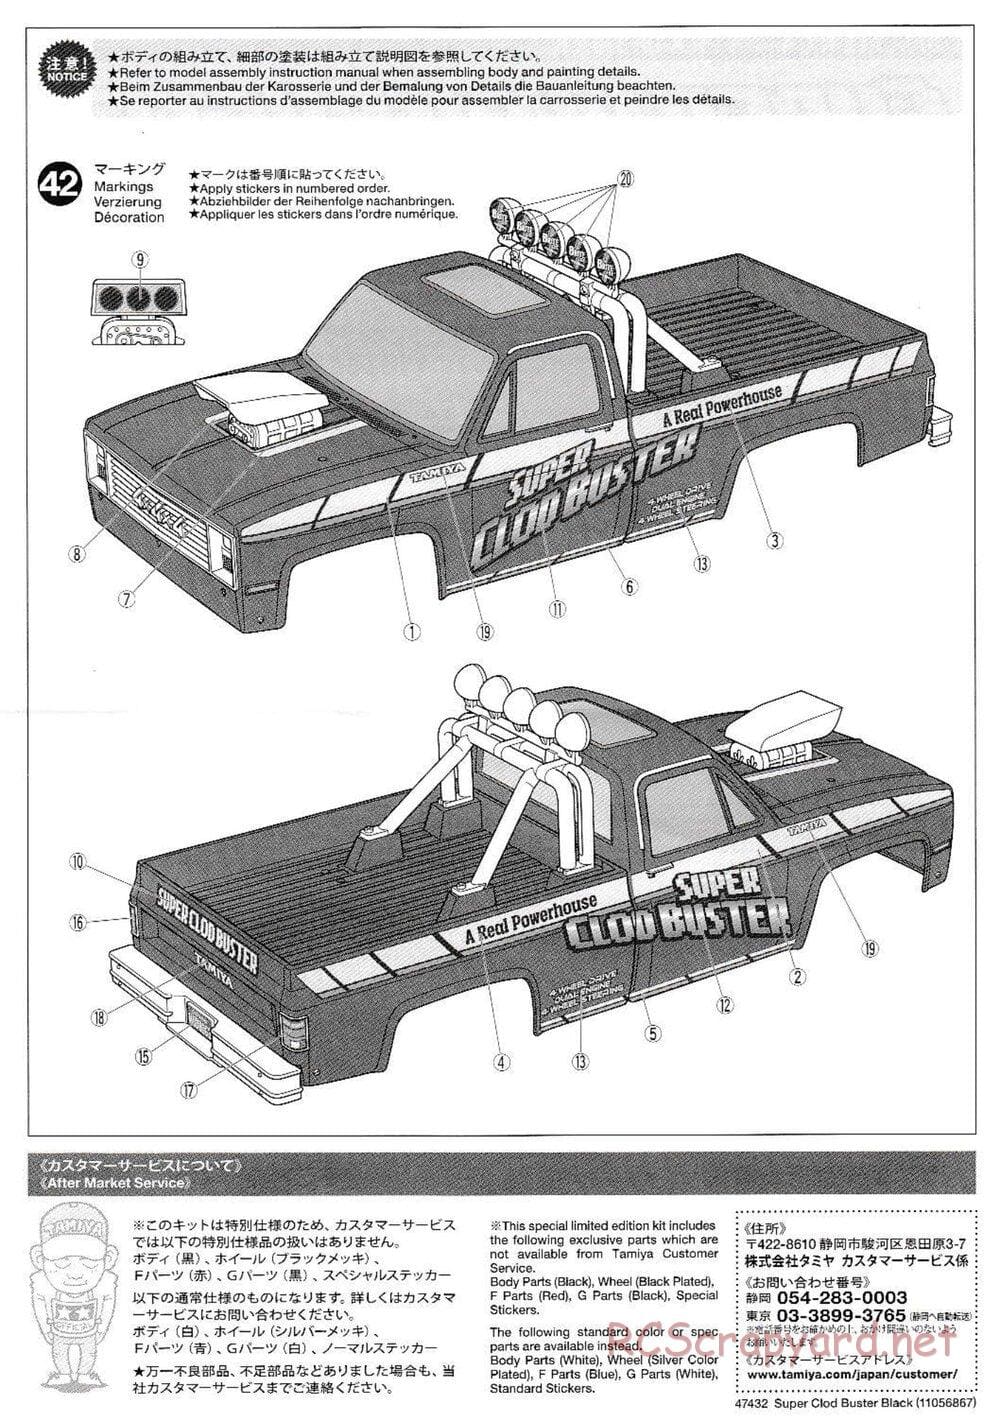 Tamiya - Super Clod Buster Black Chassis - Manual - Page 2